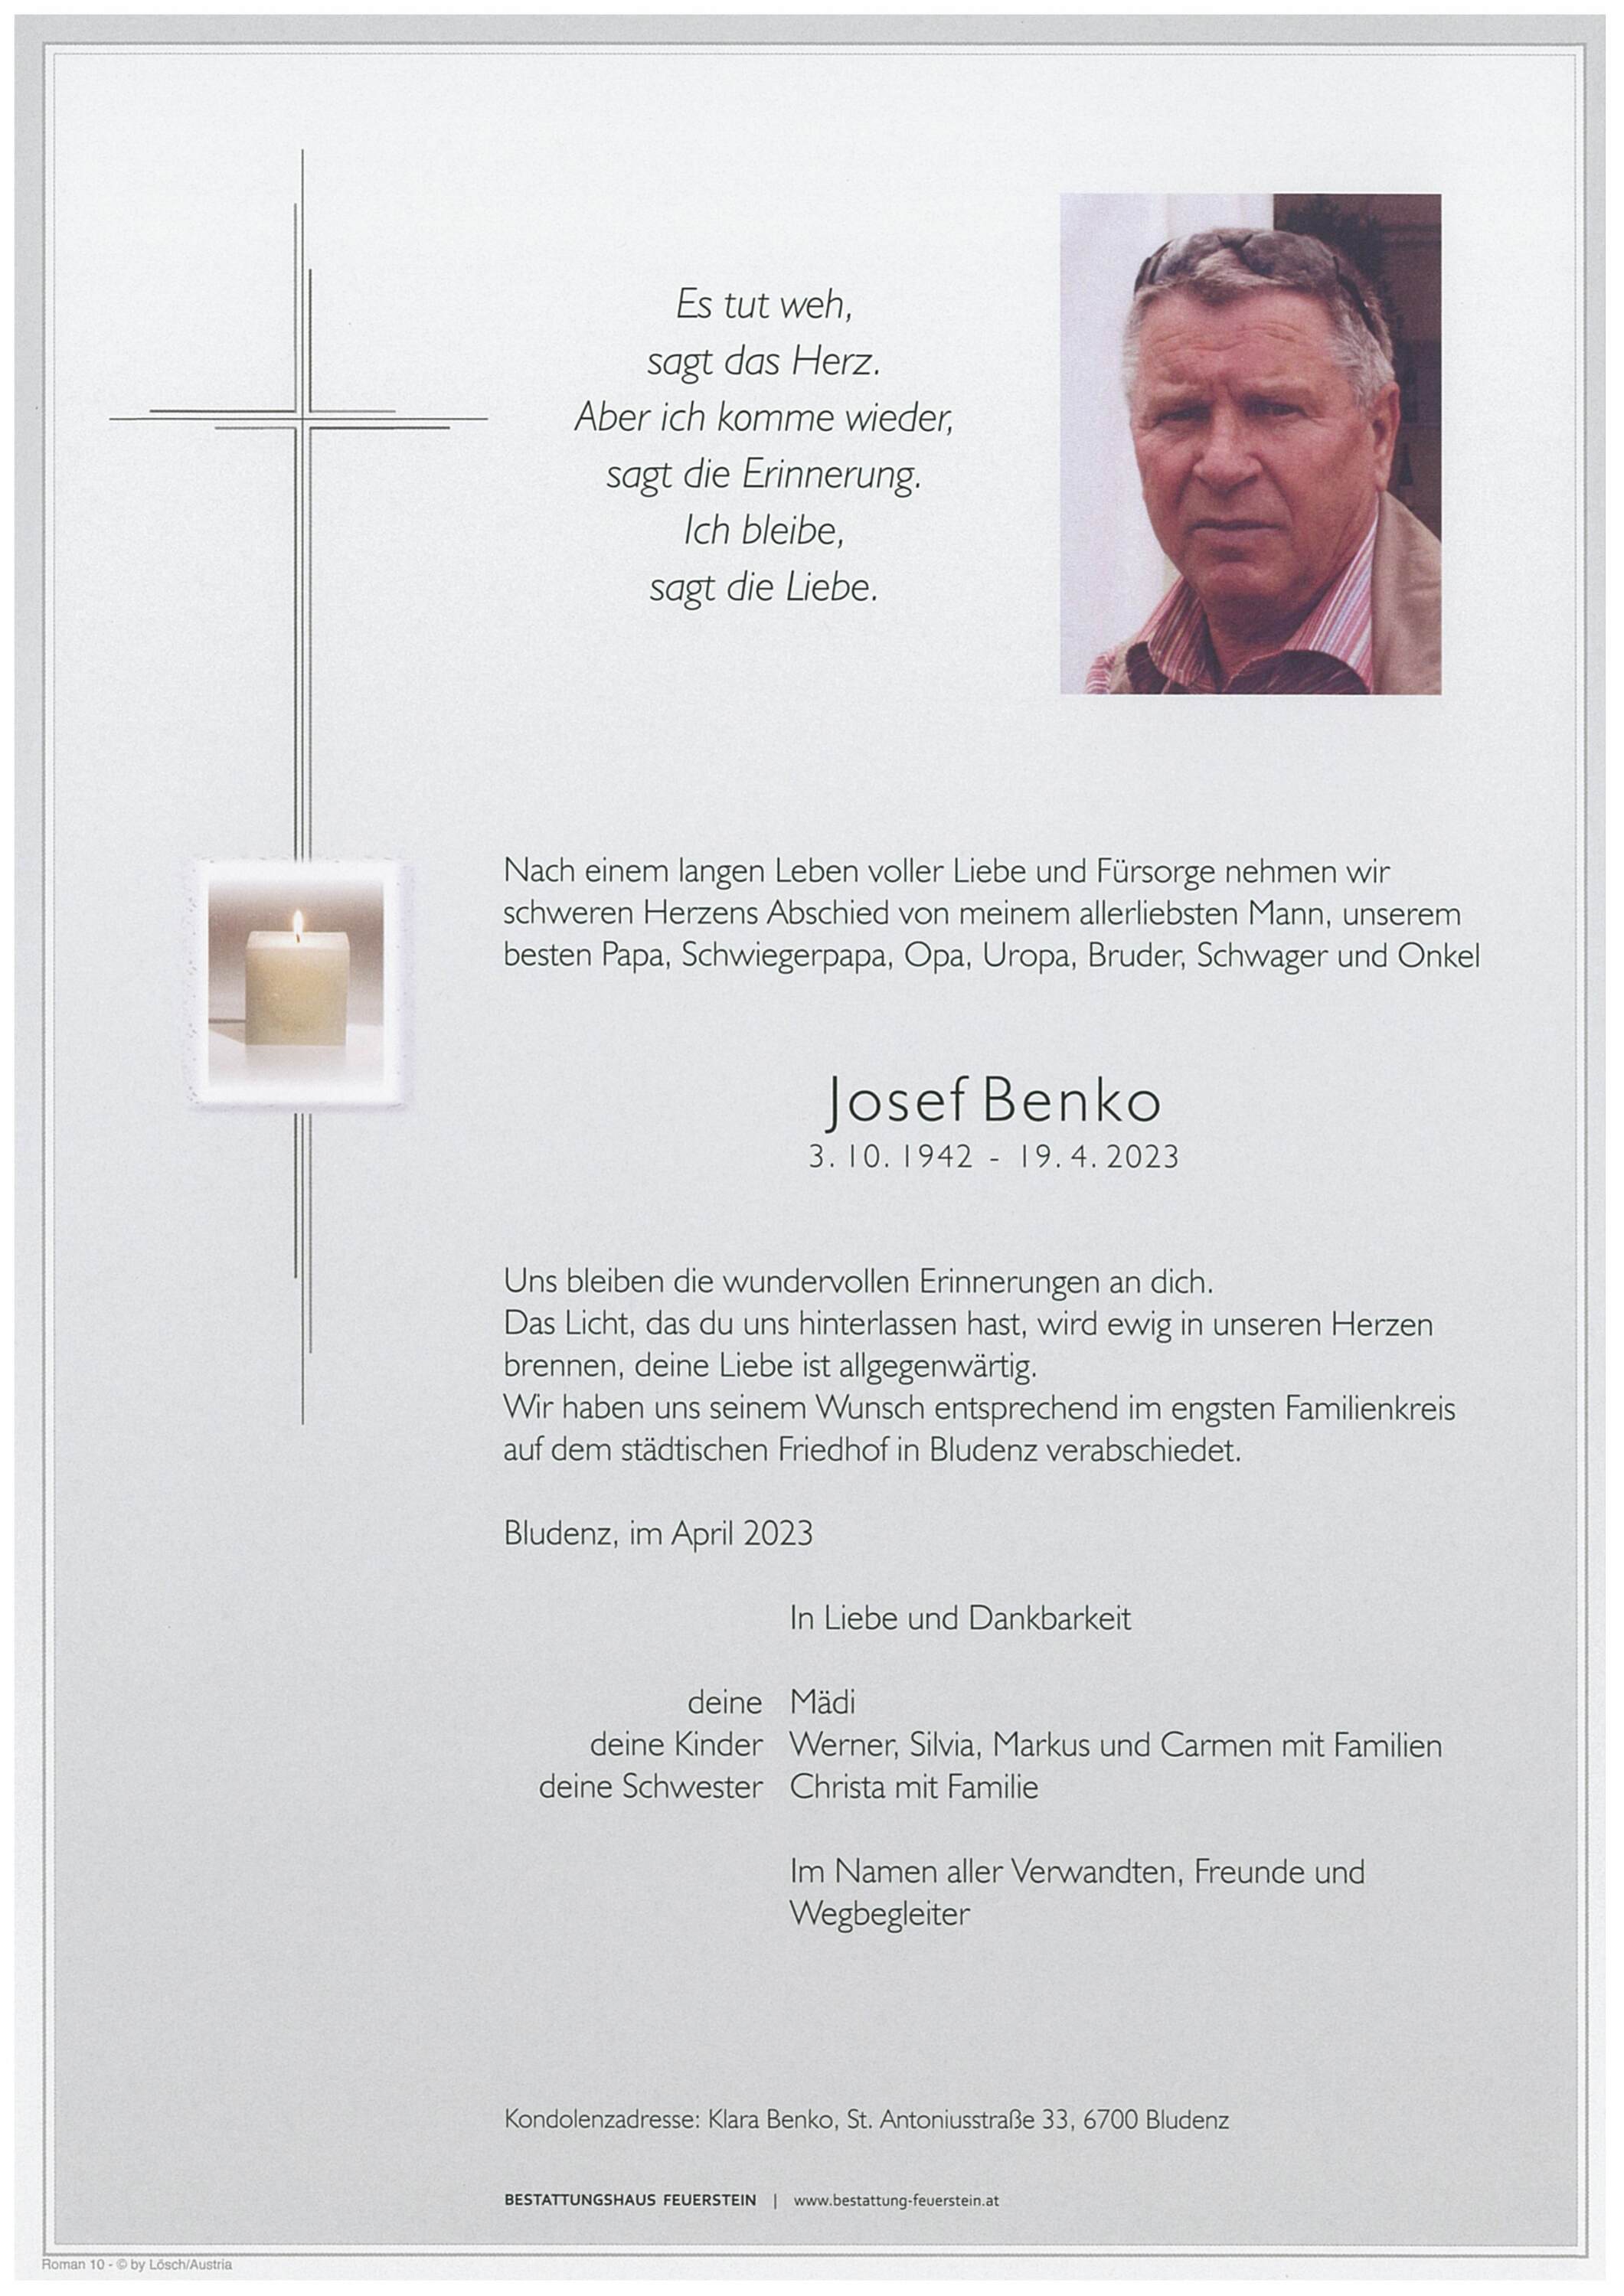 Josef Benko